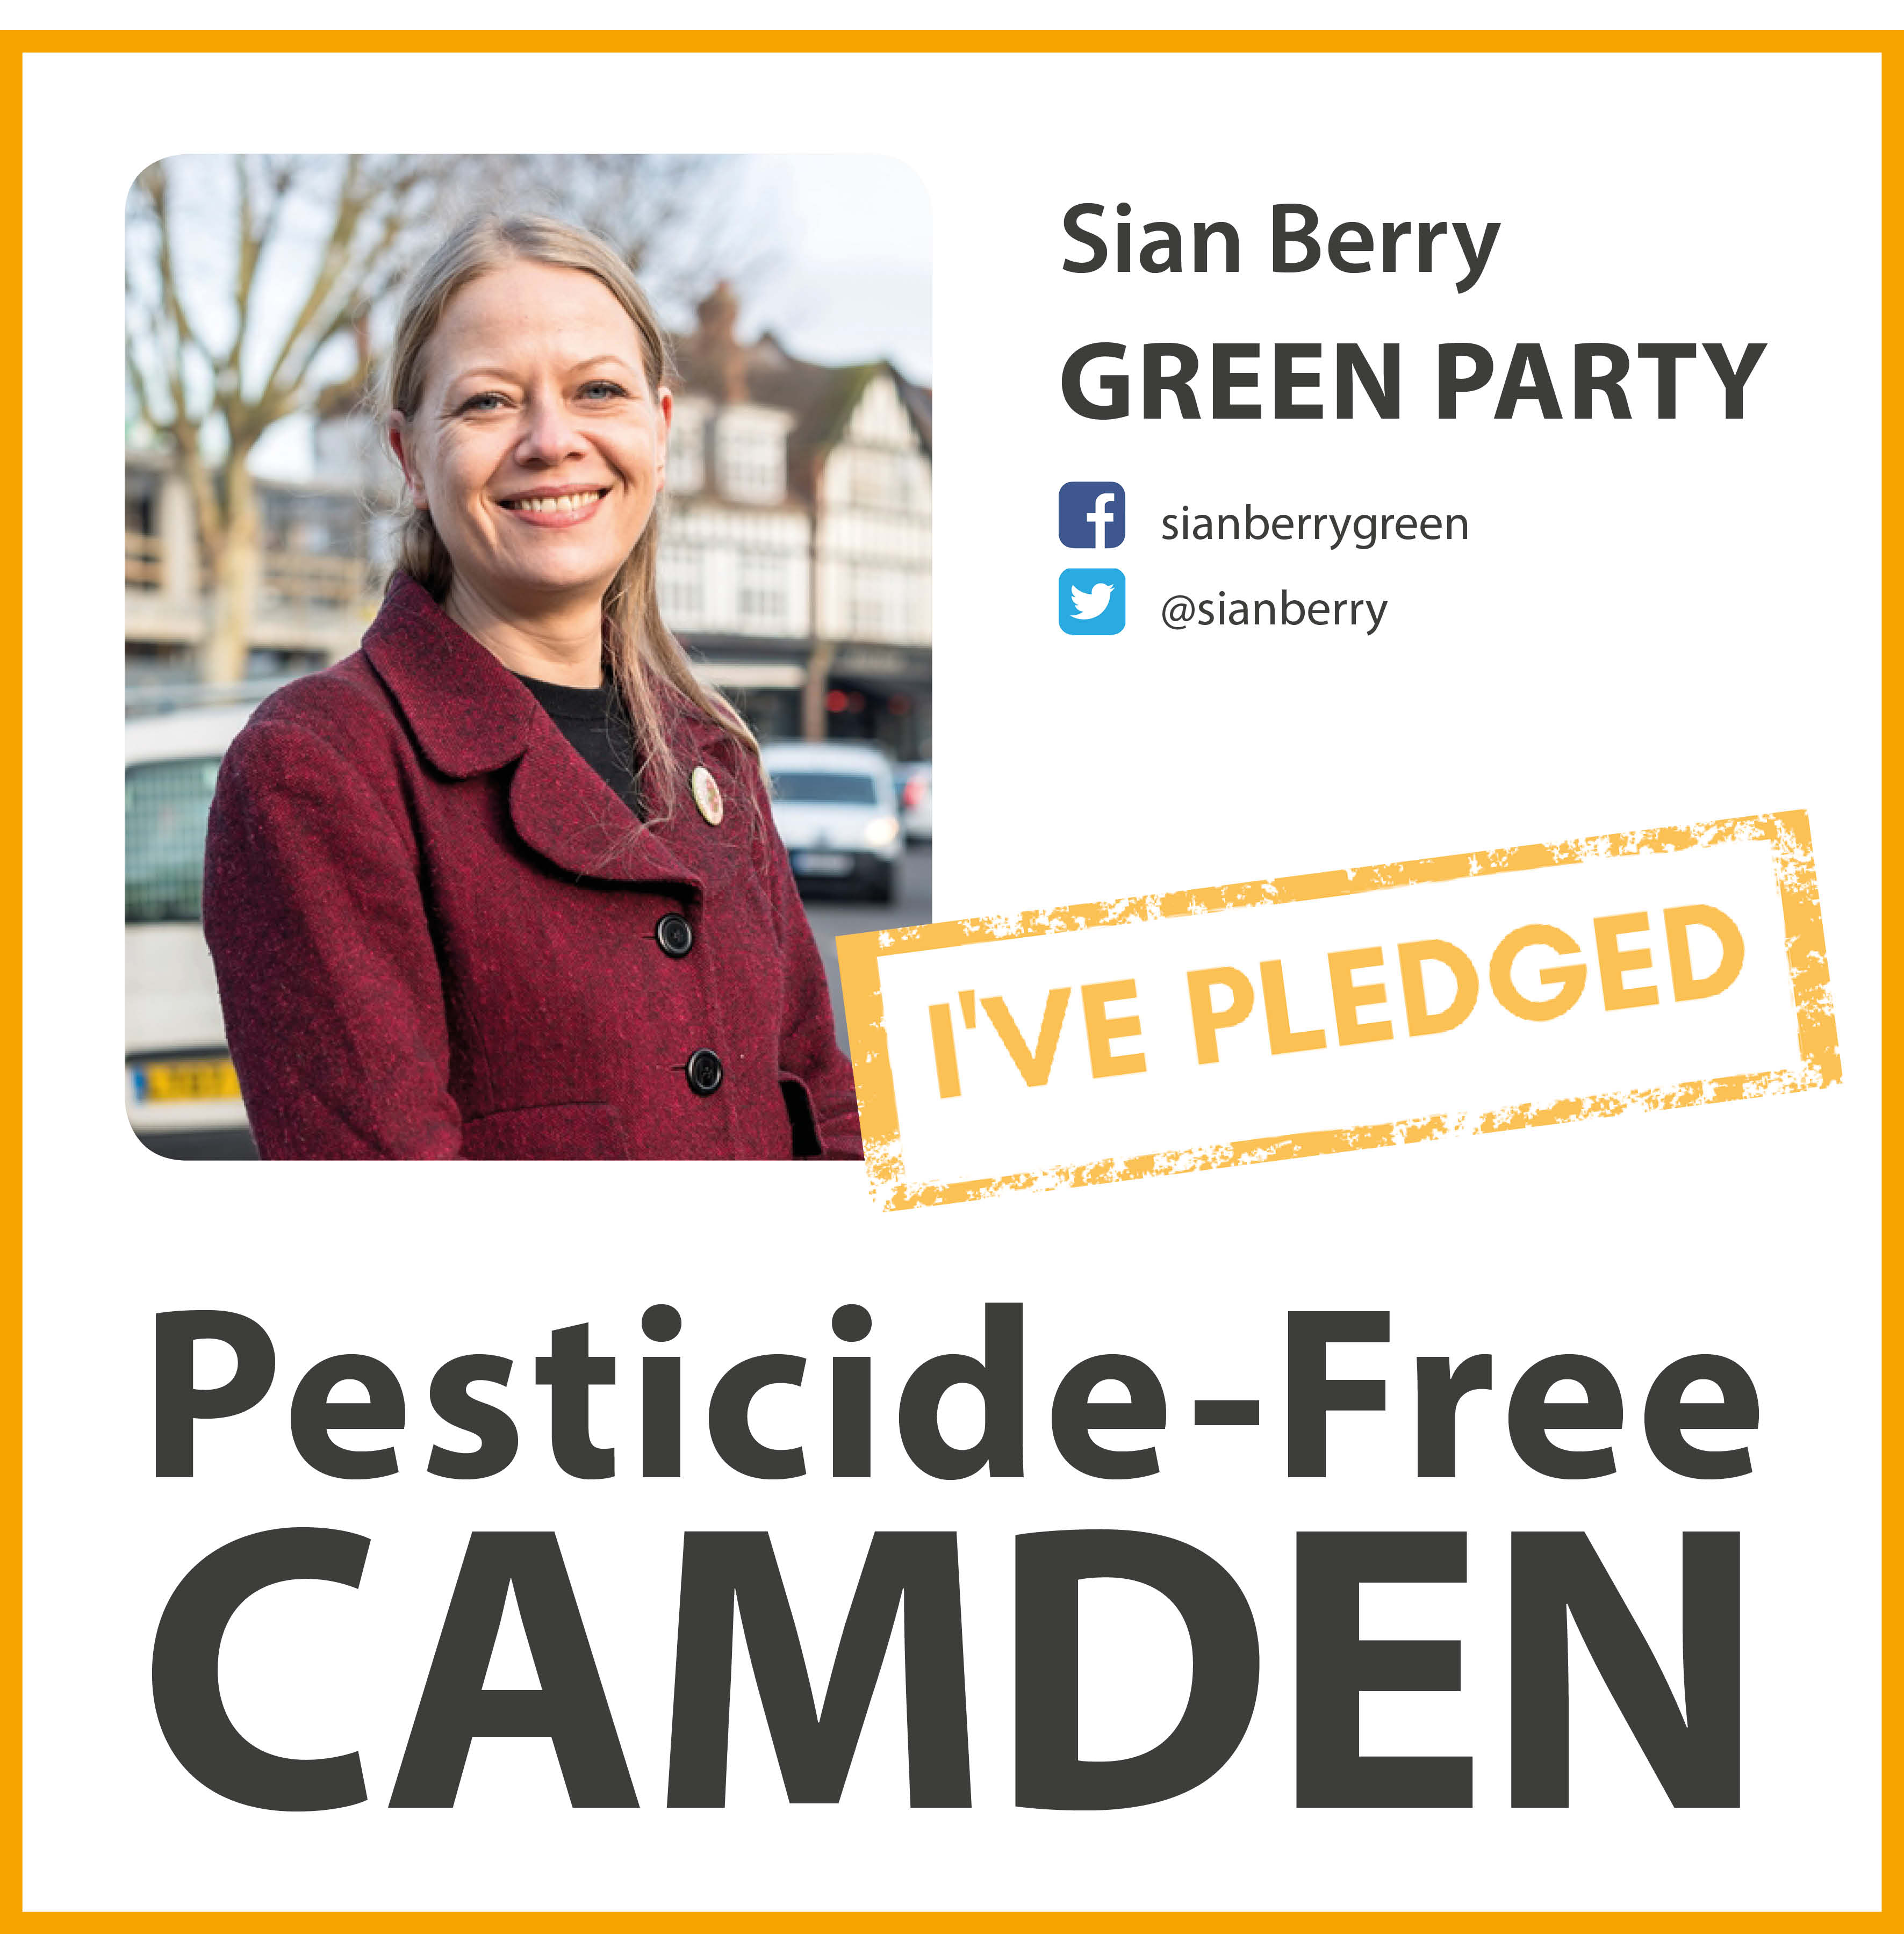 Sian Berry has taken the pesticide-free pledge in Camden